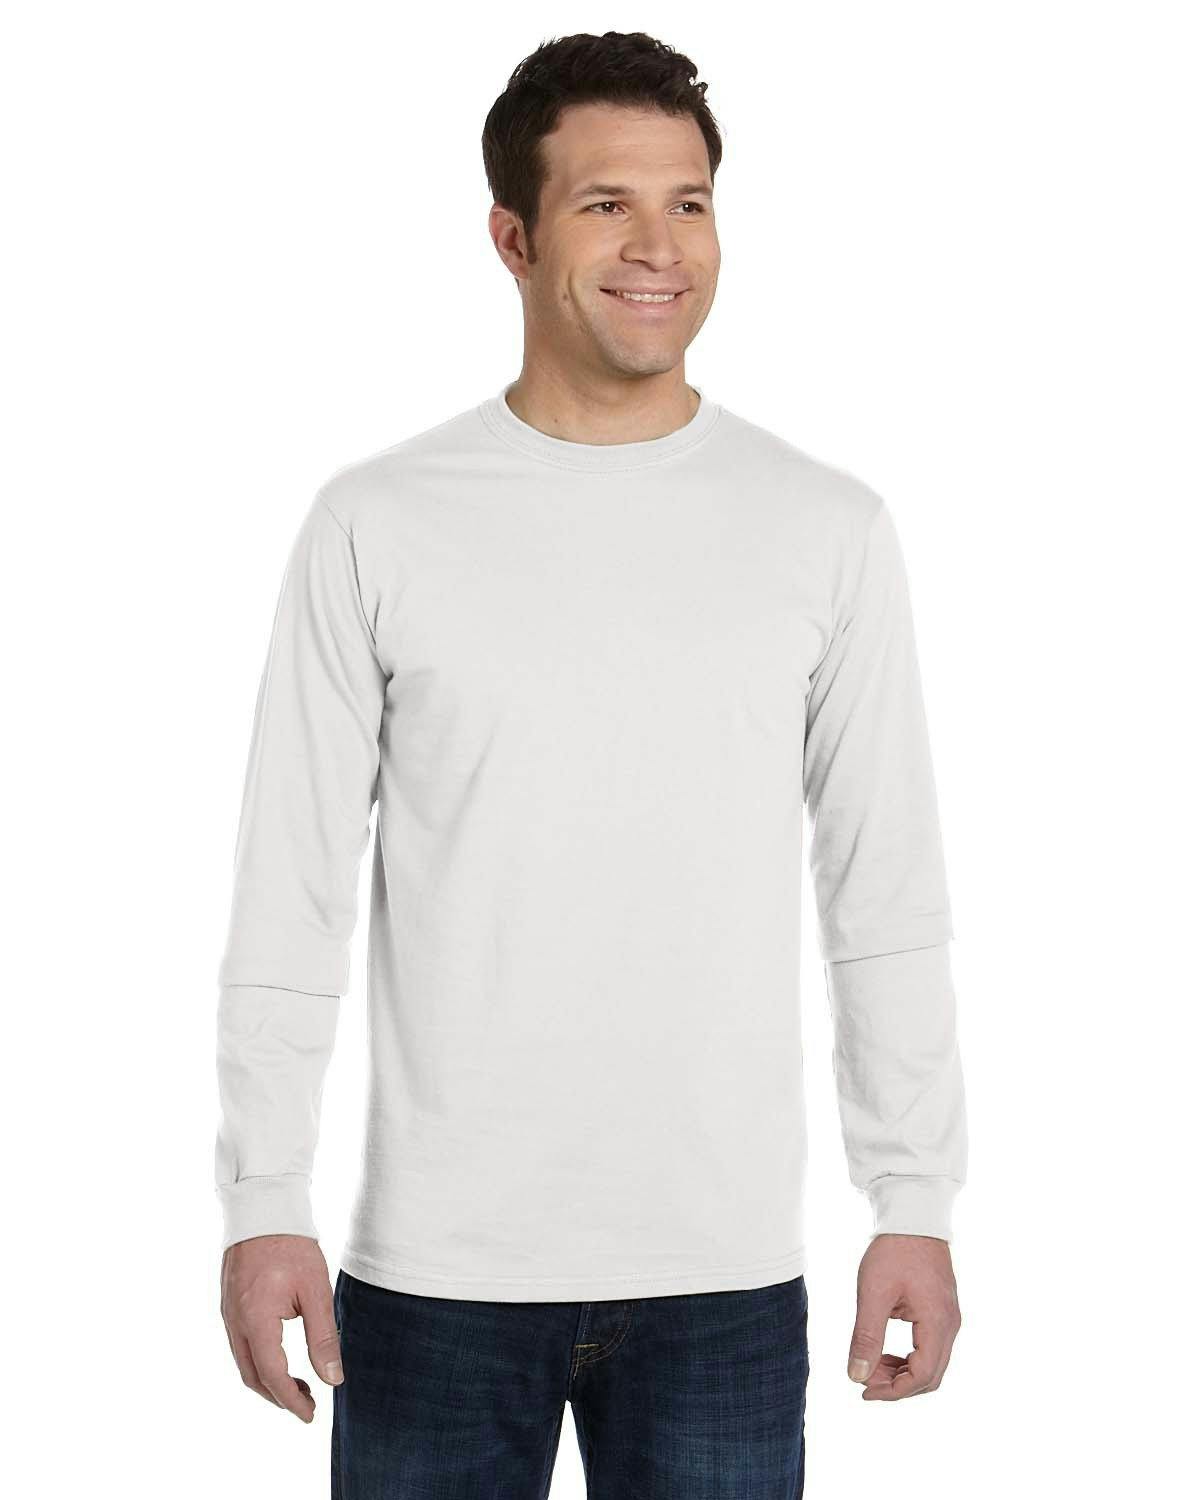 Image for Unisex Classic Long-Sleeve T-Shirt